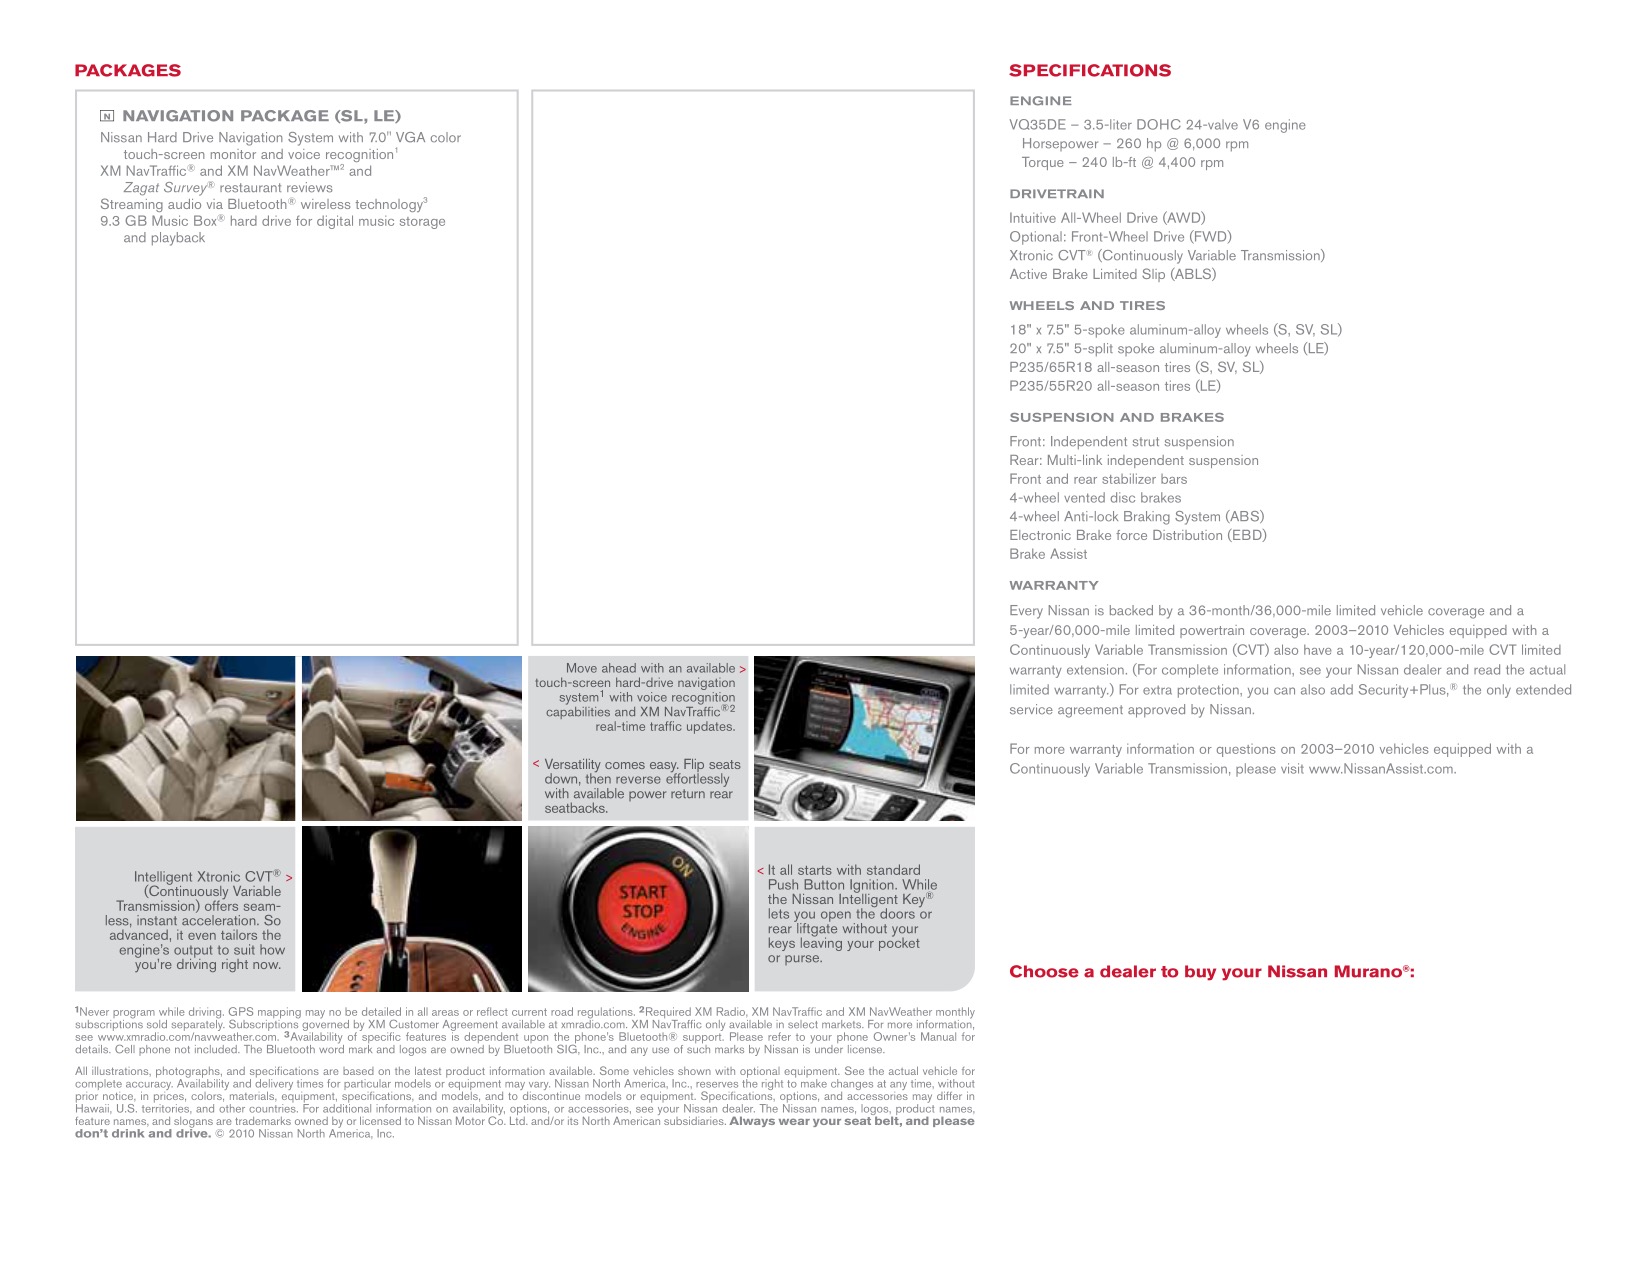 2011 Nissan Murano Brochure Page 1